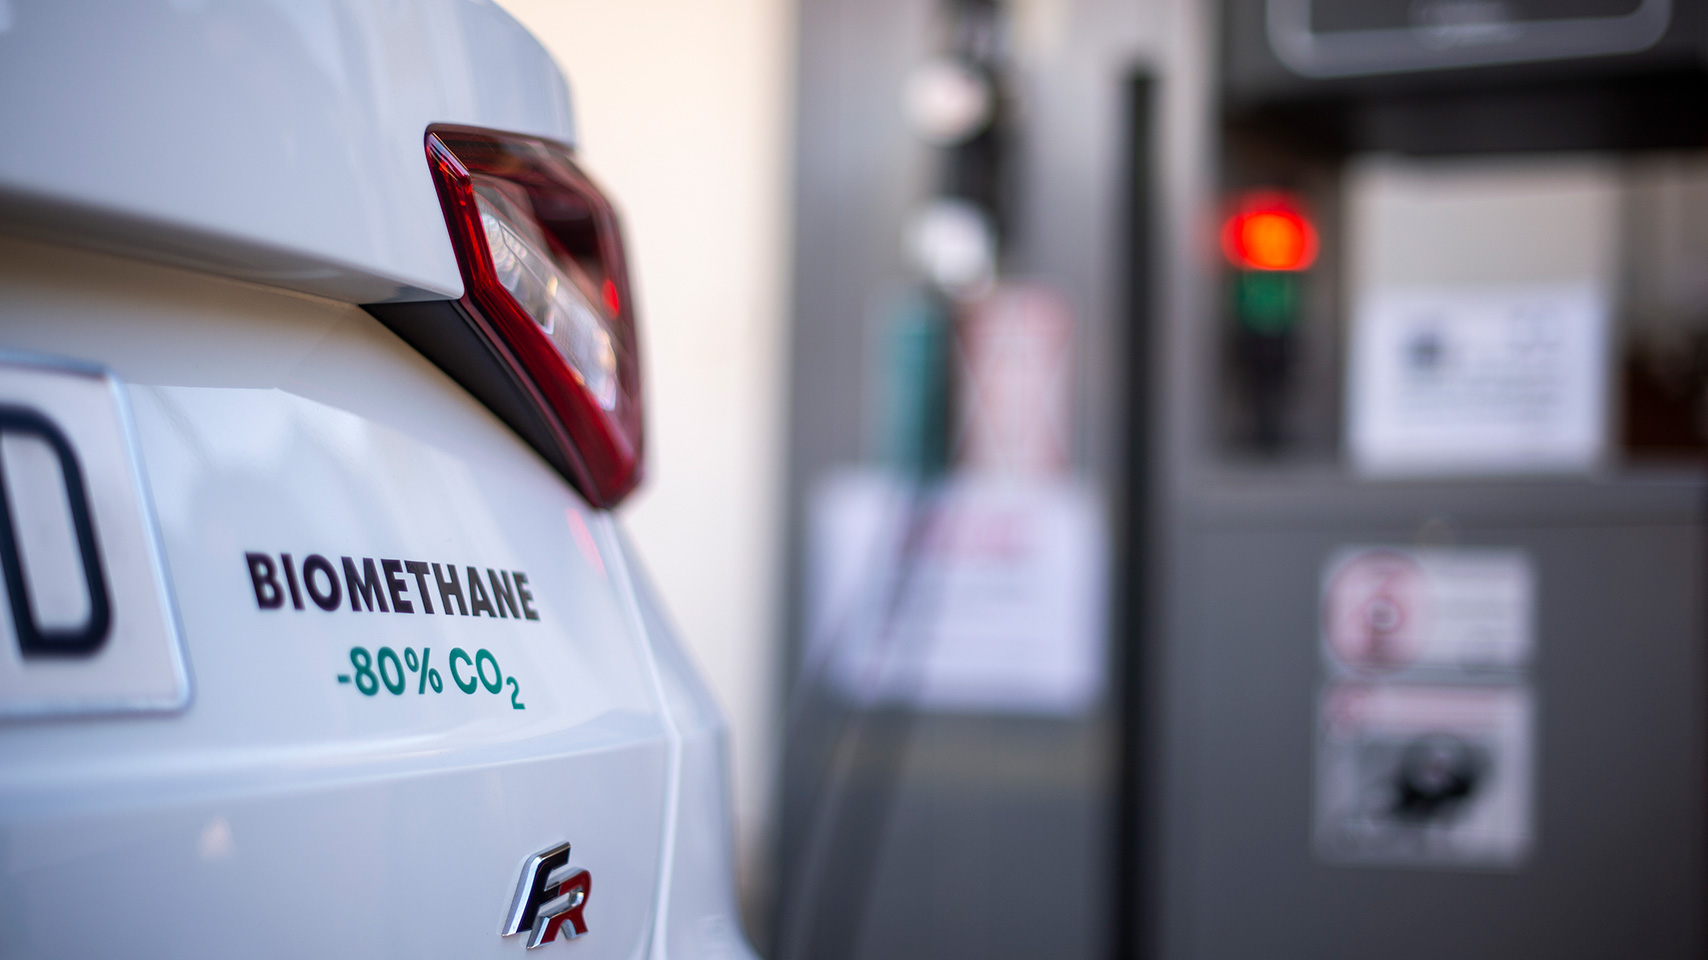 Biomethane powered SEAT Leon at gas station